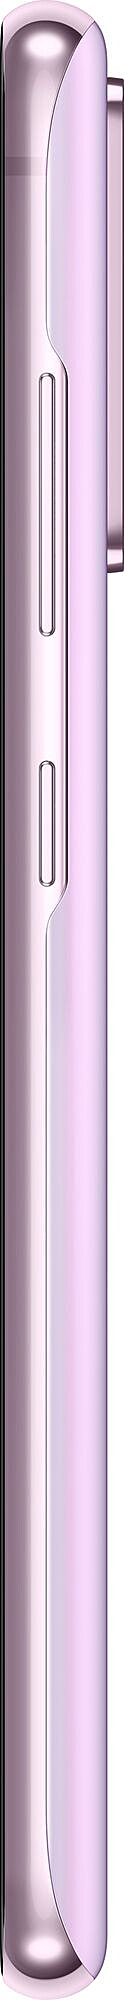 Смартфон Samsung Galaxy S20FE (SM-G780G) 8/256GB (ЕАС) Cloud Lavender (Лавандовый)